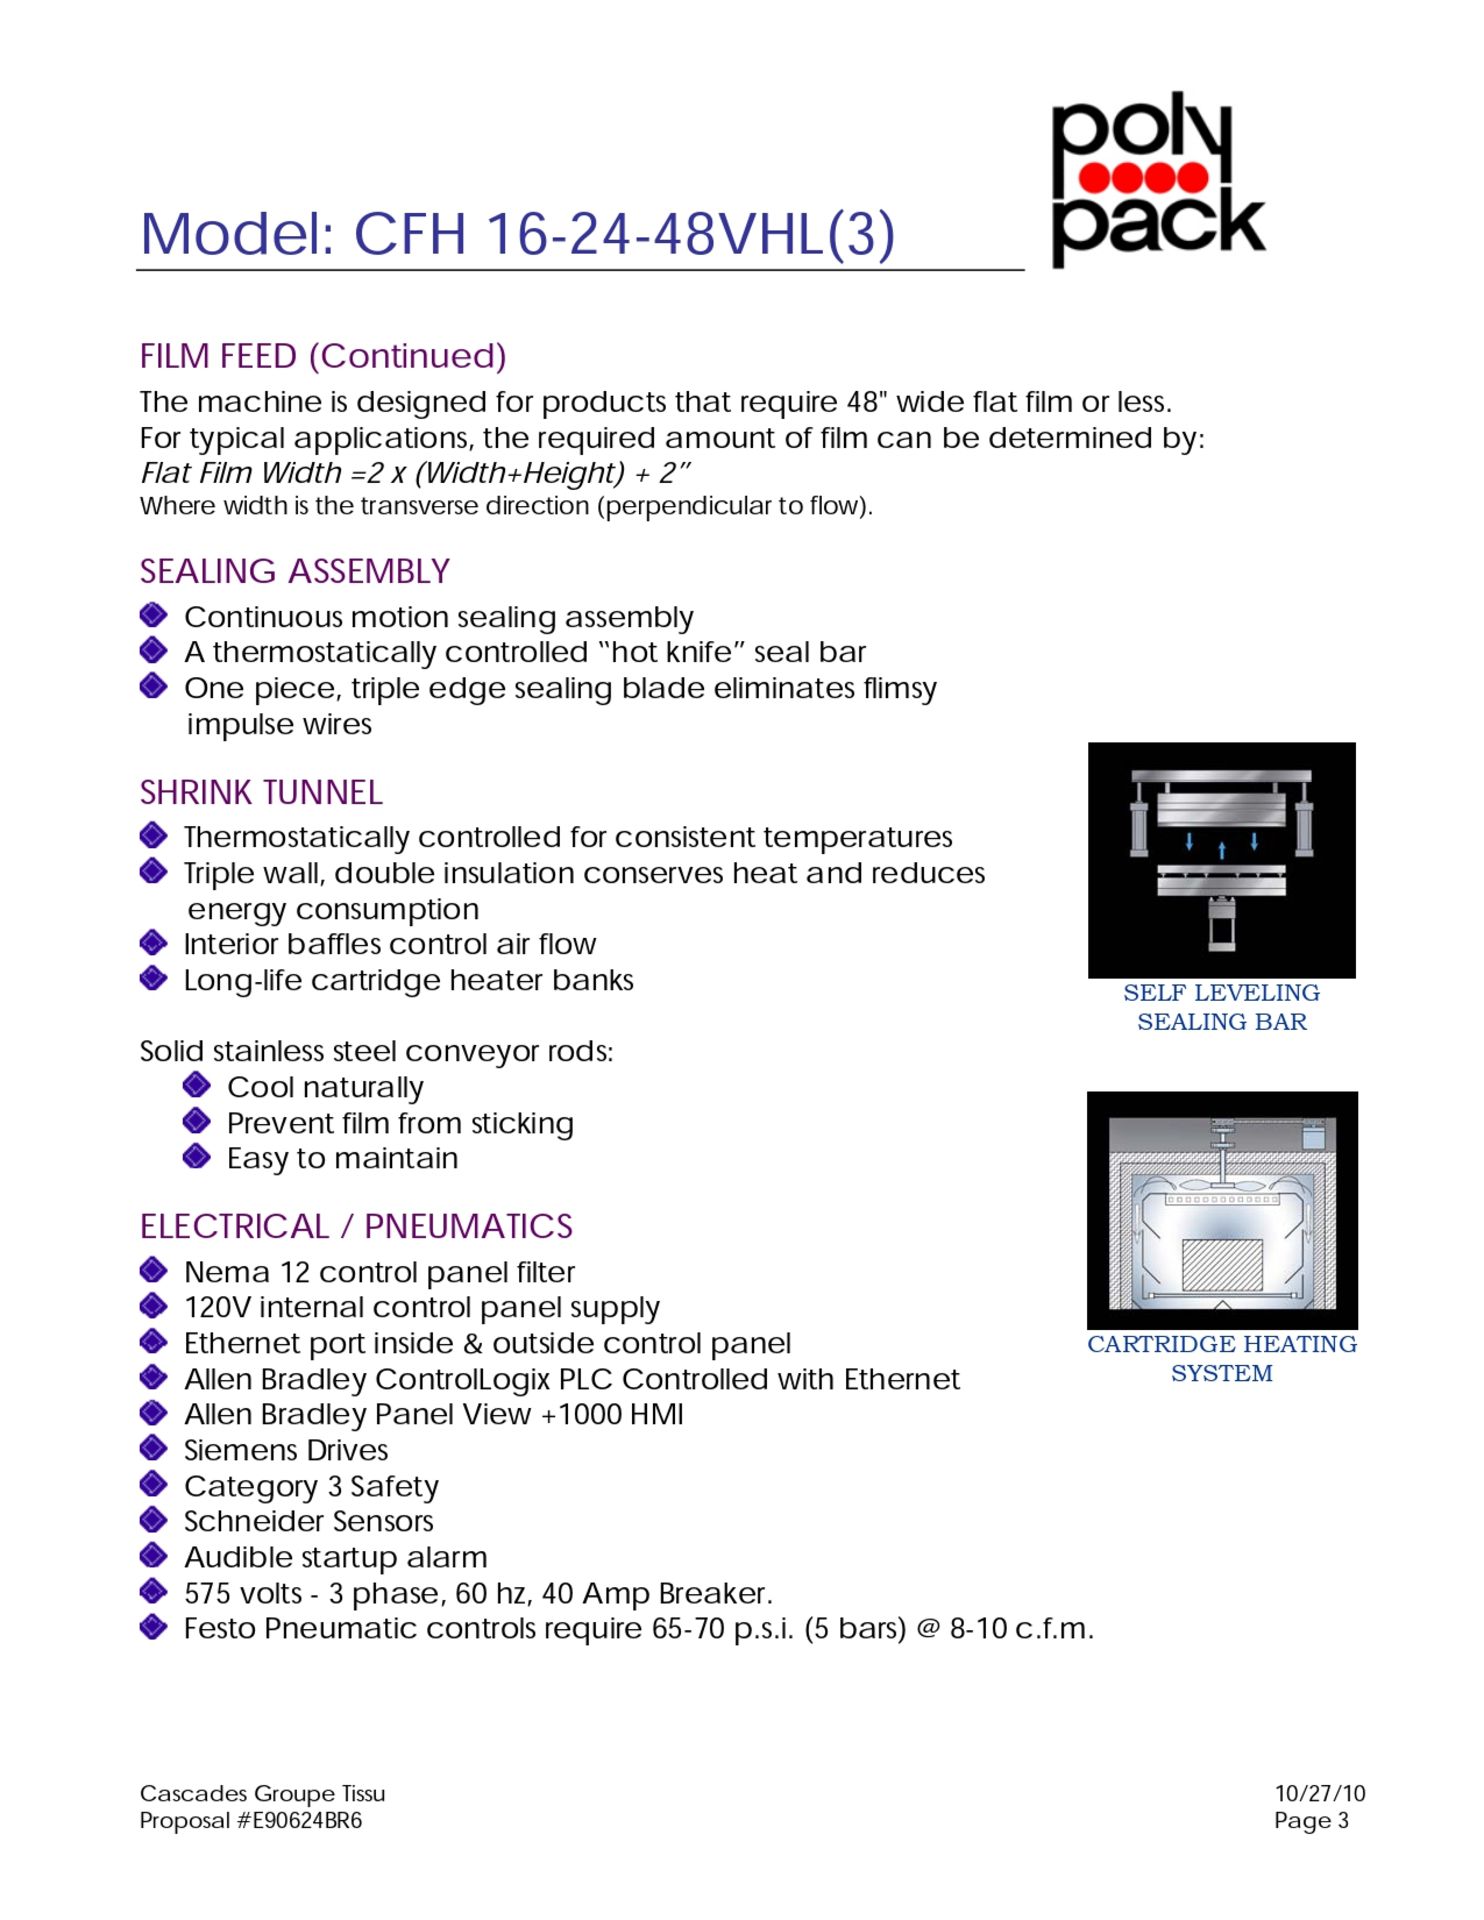 2010 SHRINK WRAPPER FULLY AUTOMATIC, BRAND: POLY PACK, MODEL CFH 16-24-48VHL(3), 600V, 40AMP, - Image 15 of 29